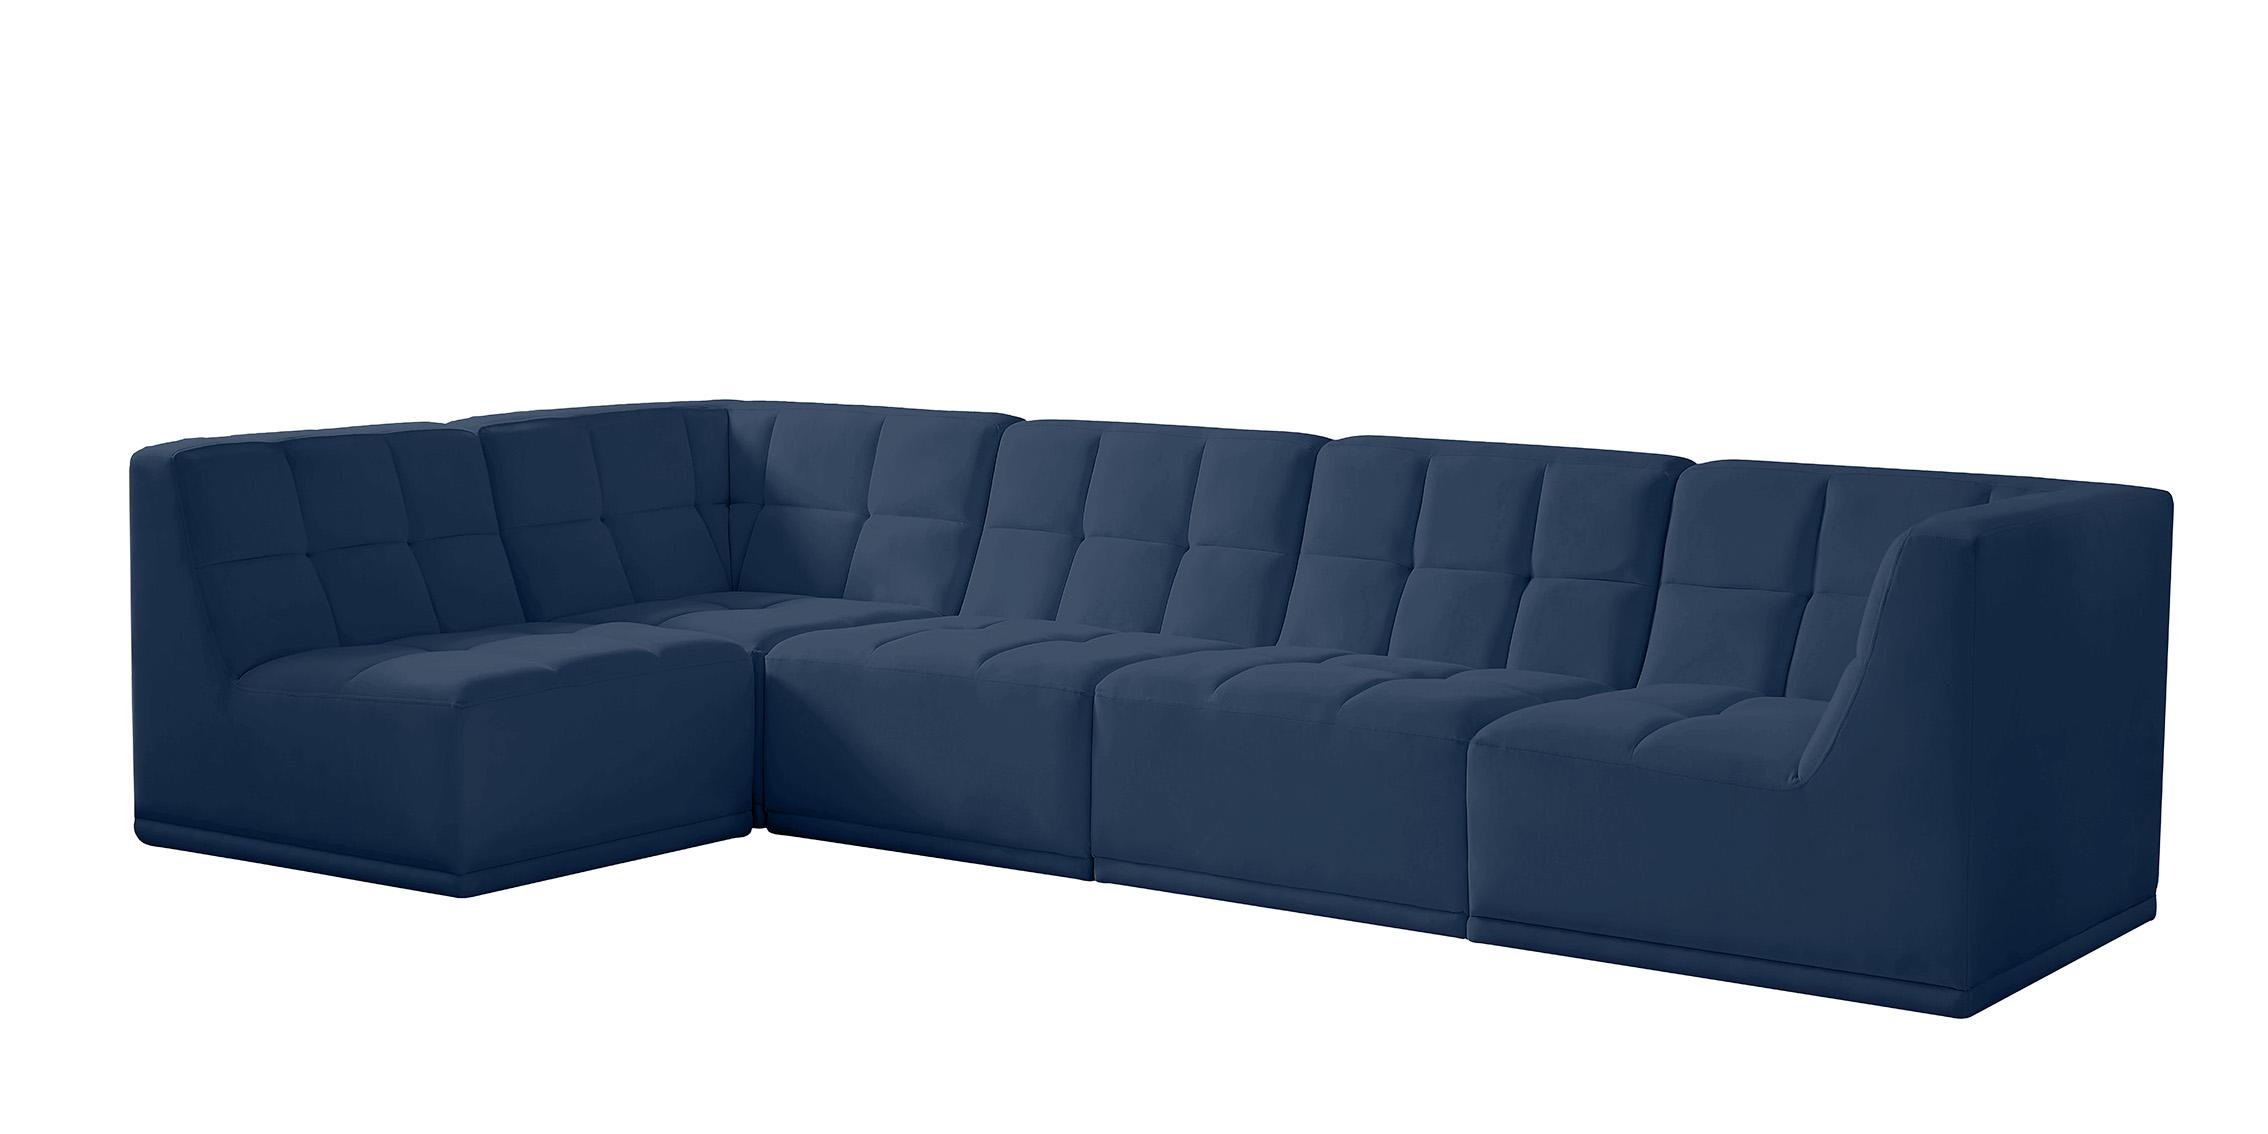 Meridian Furniture RELAX 650Navy-Sec5A Modular Sectional